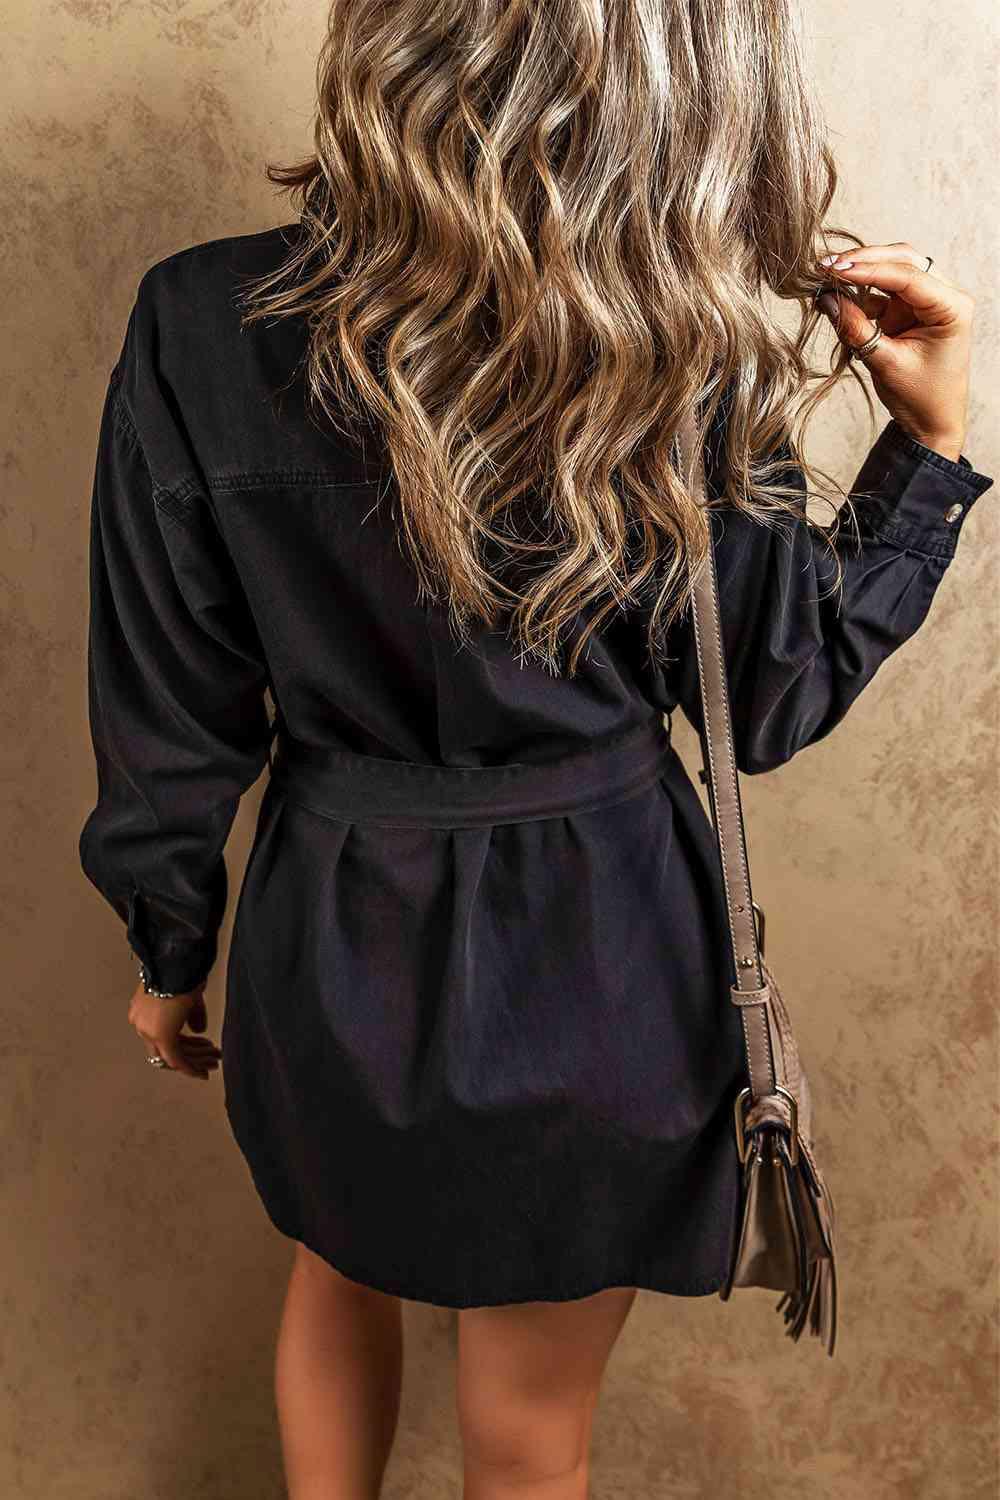 the back of a woman's head wearing a black shirt dress